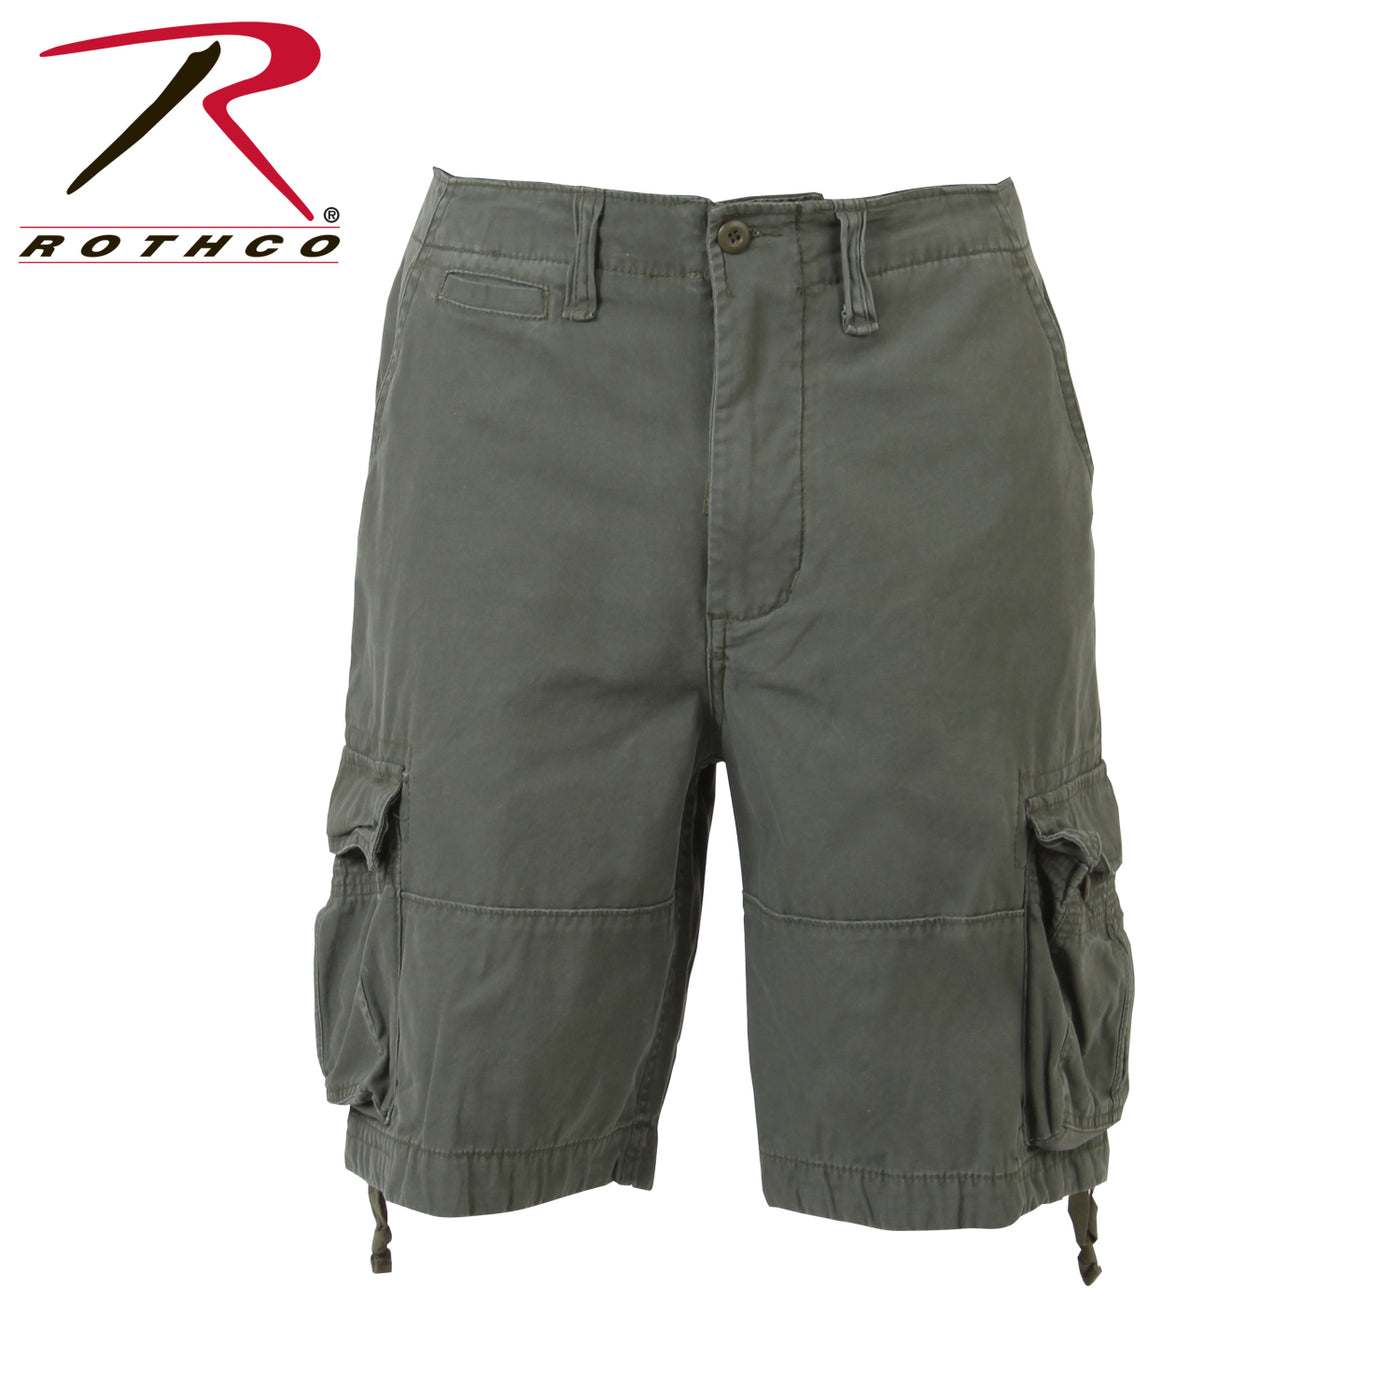 Rothco Vintage Utility Shorts